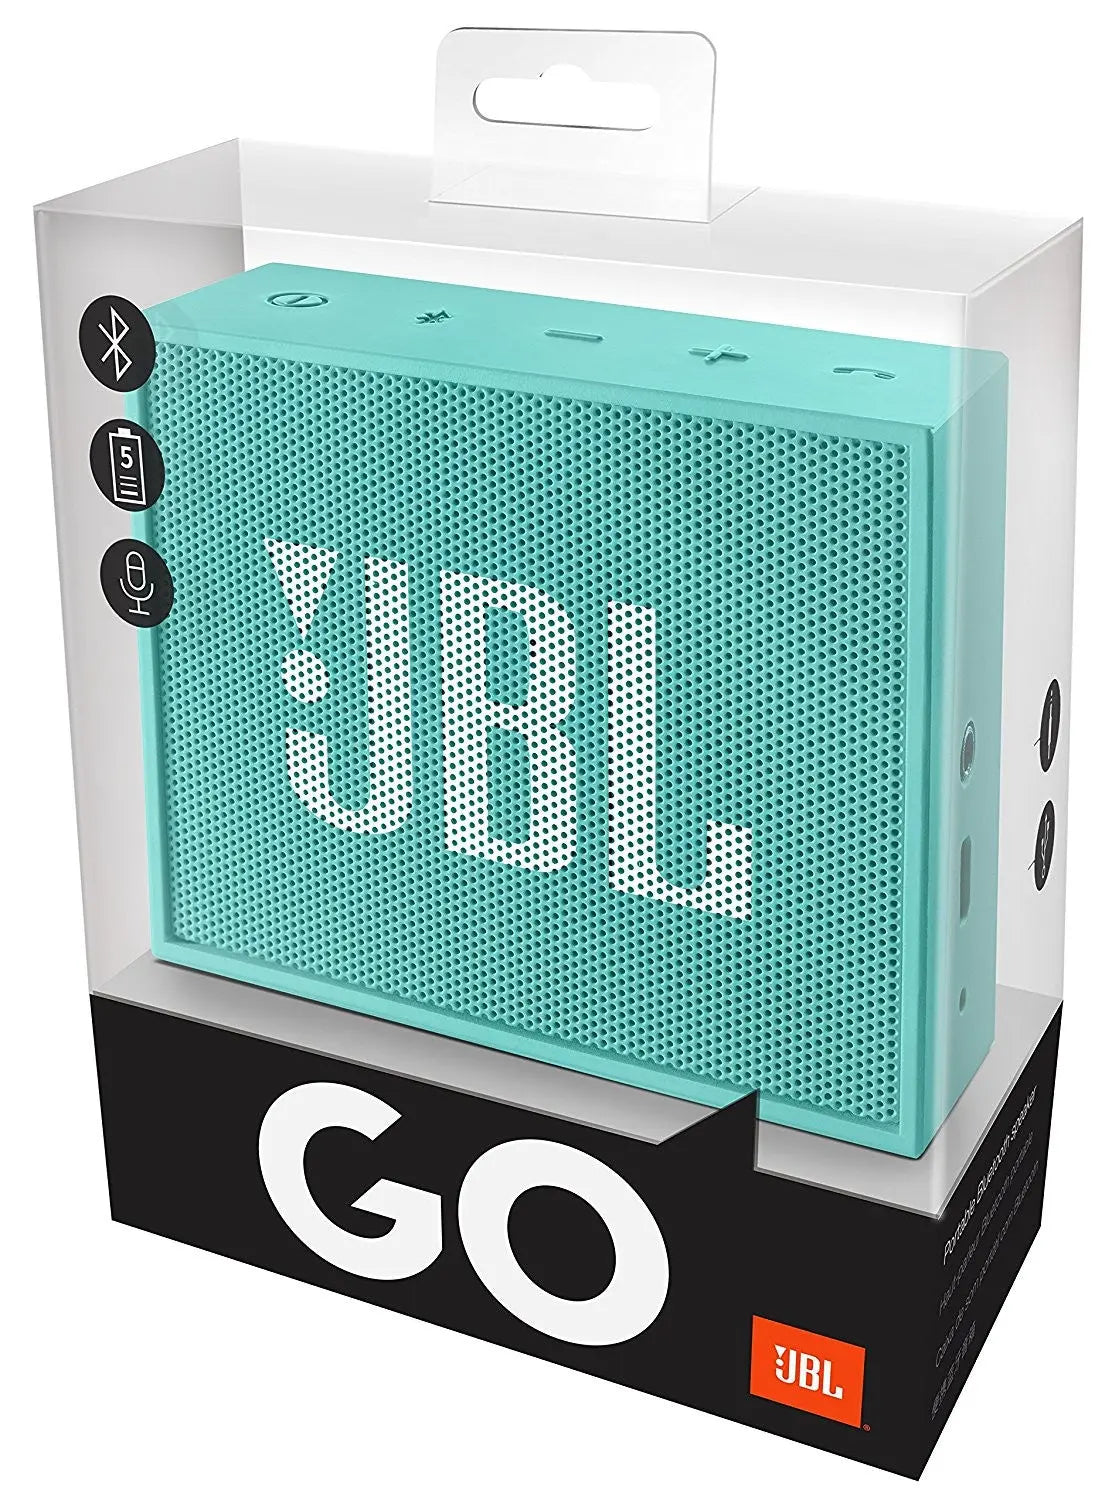 Enceinte Bluetooth JBL Go Vert turquoise comptact sans fil